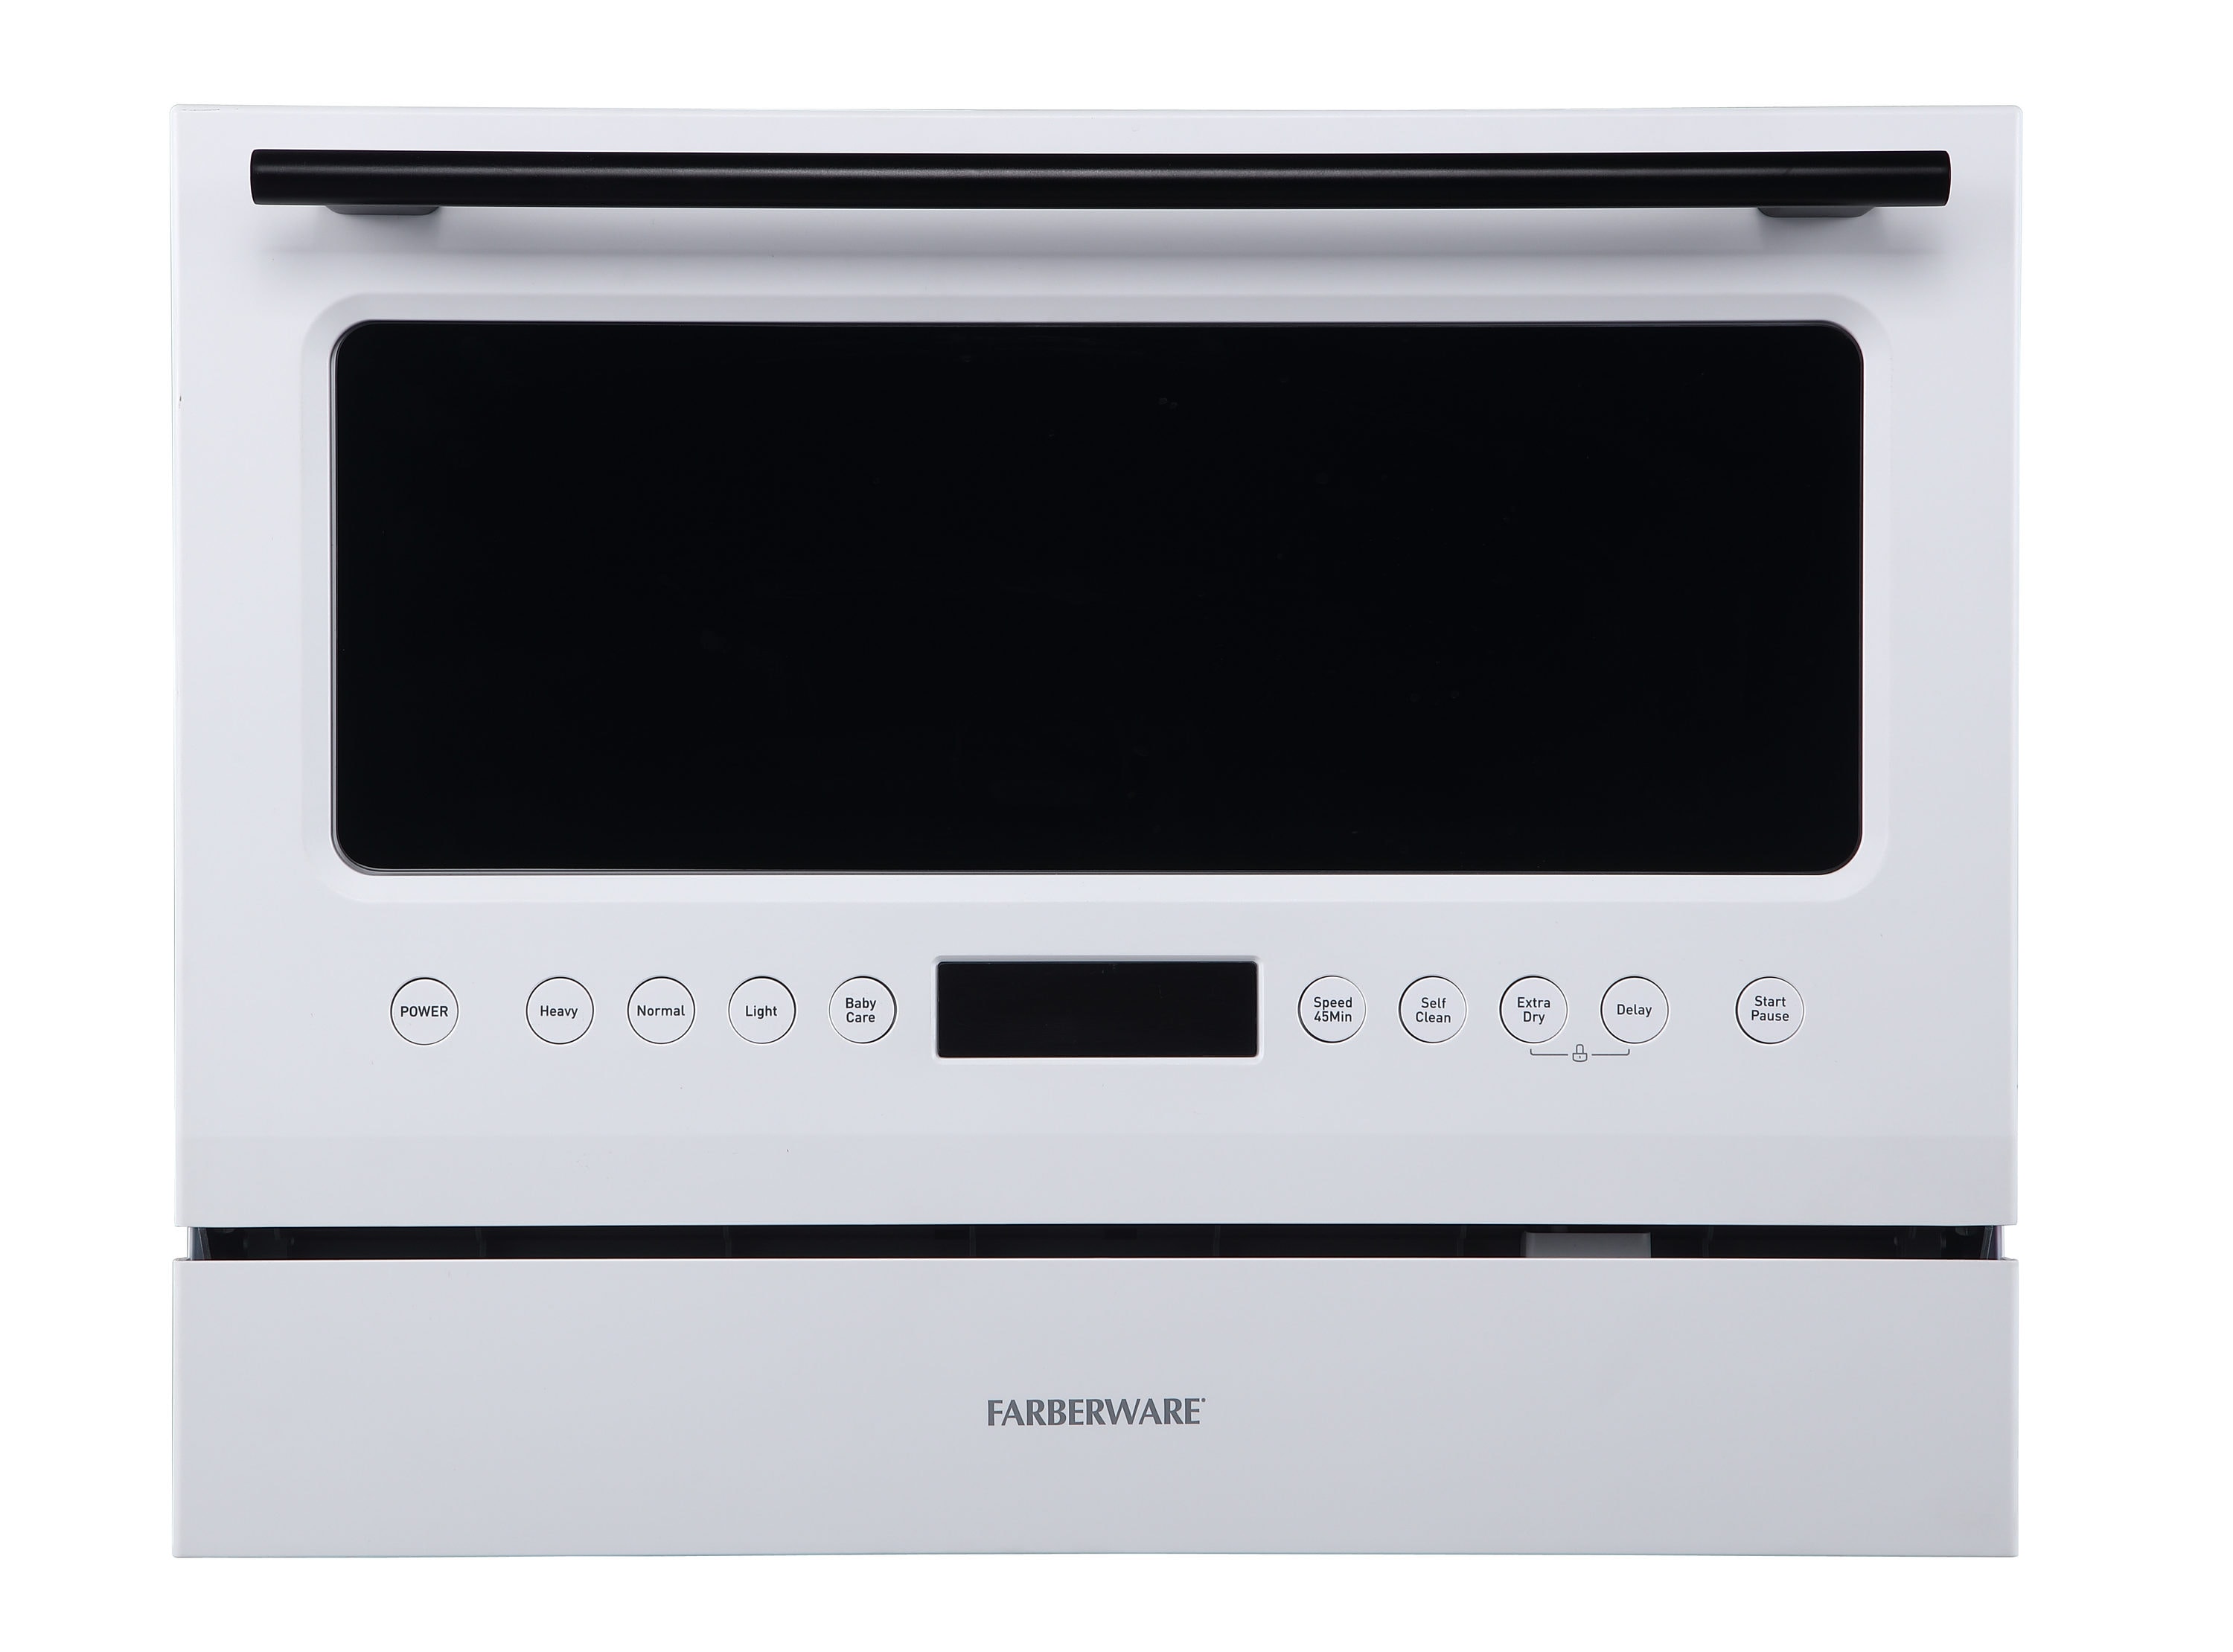 Farberware Professional 21.8-in Portable Countertop Dishwasher (White)  ENERGY STAR